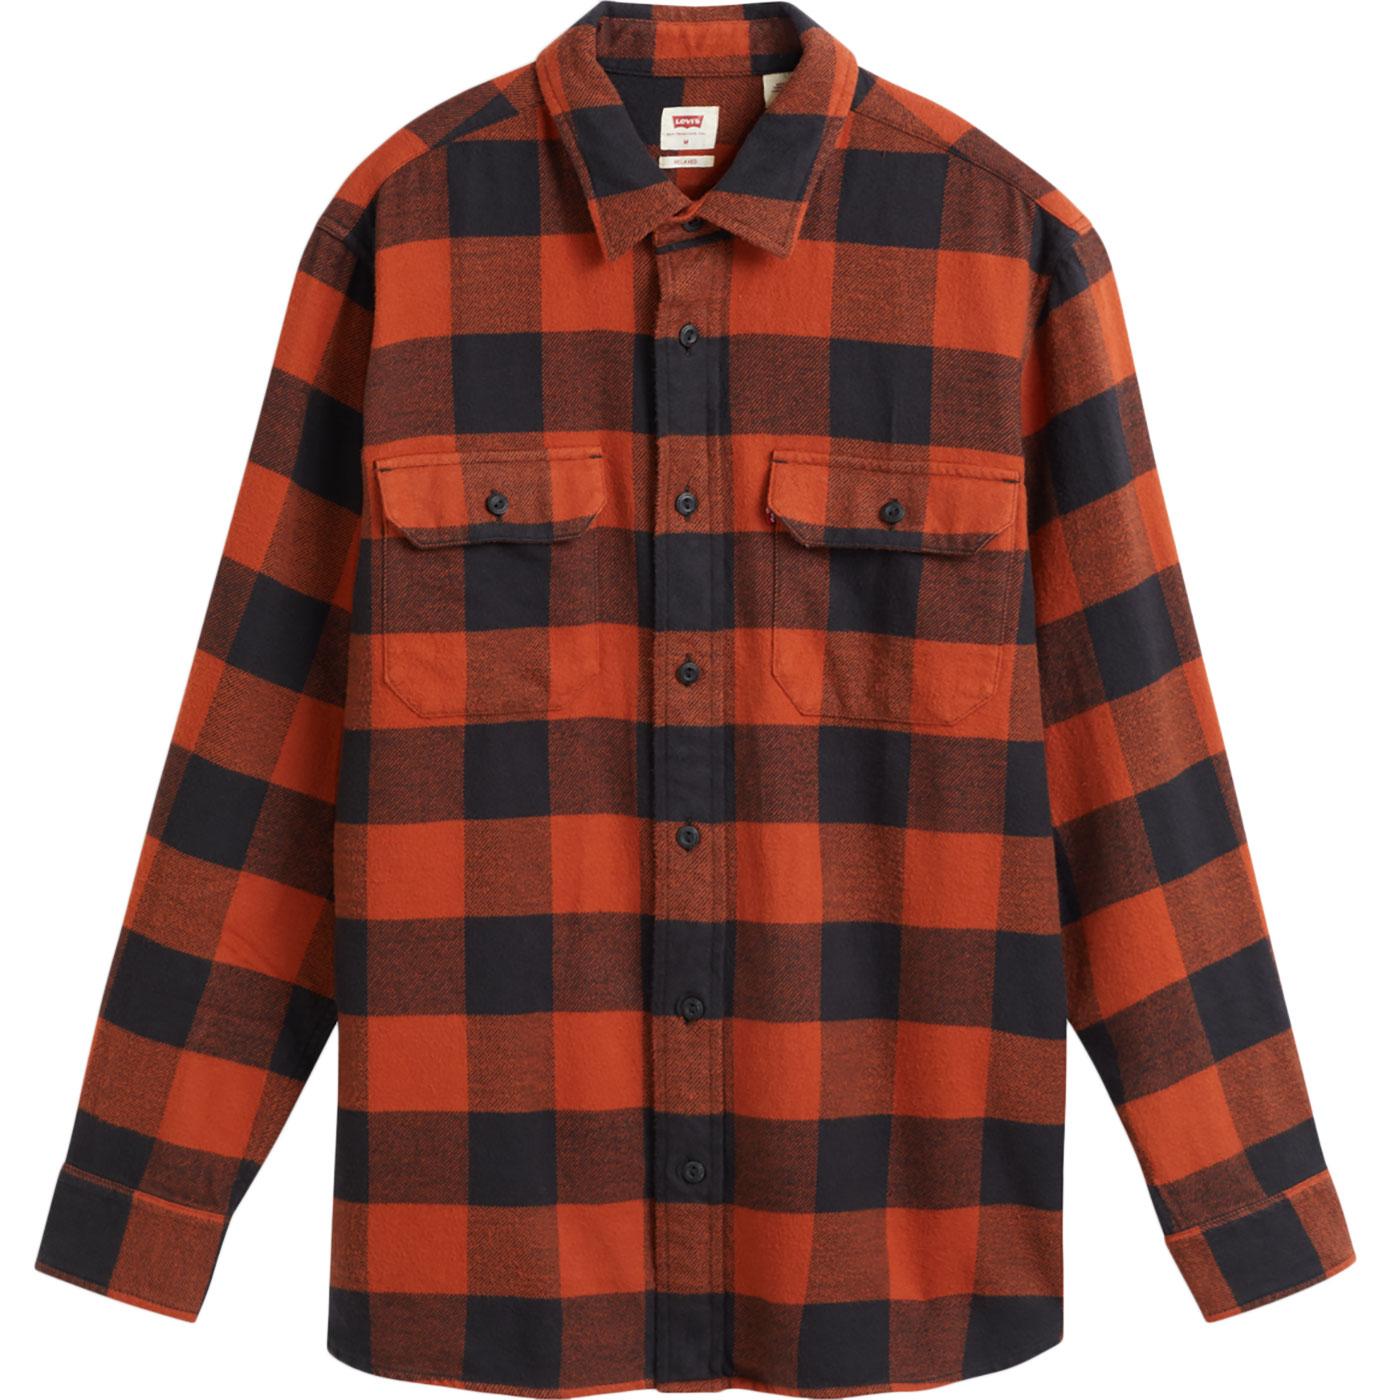 LEVI'S Retro Flannel Block Check Worker Shirt (PR)